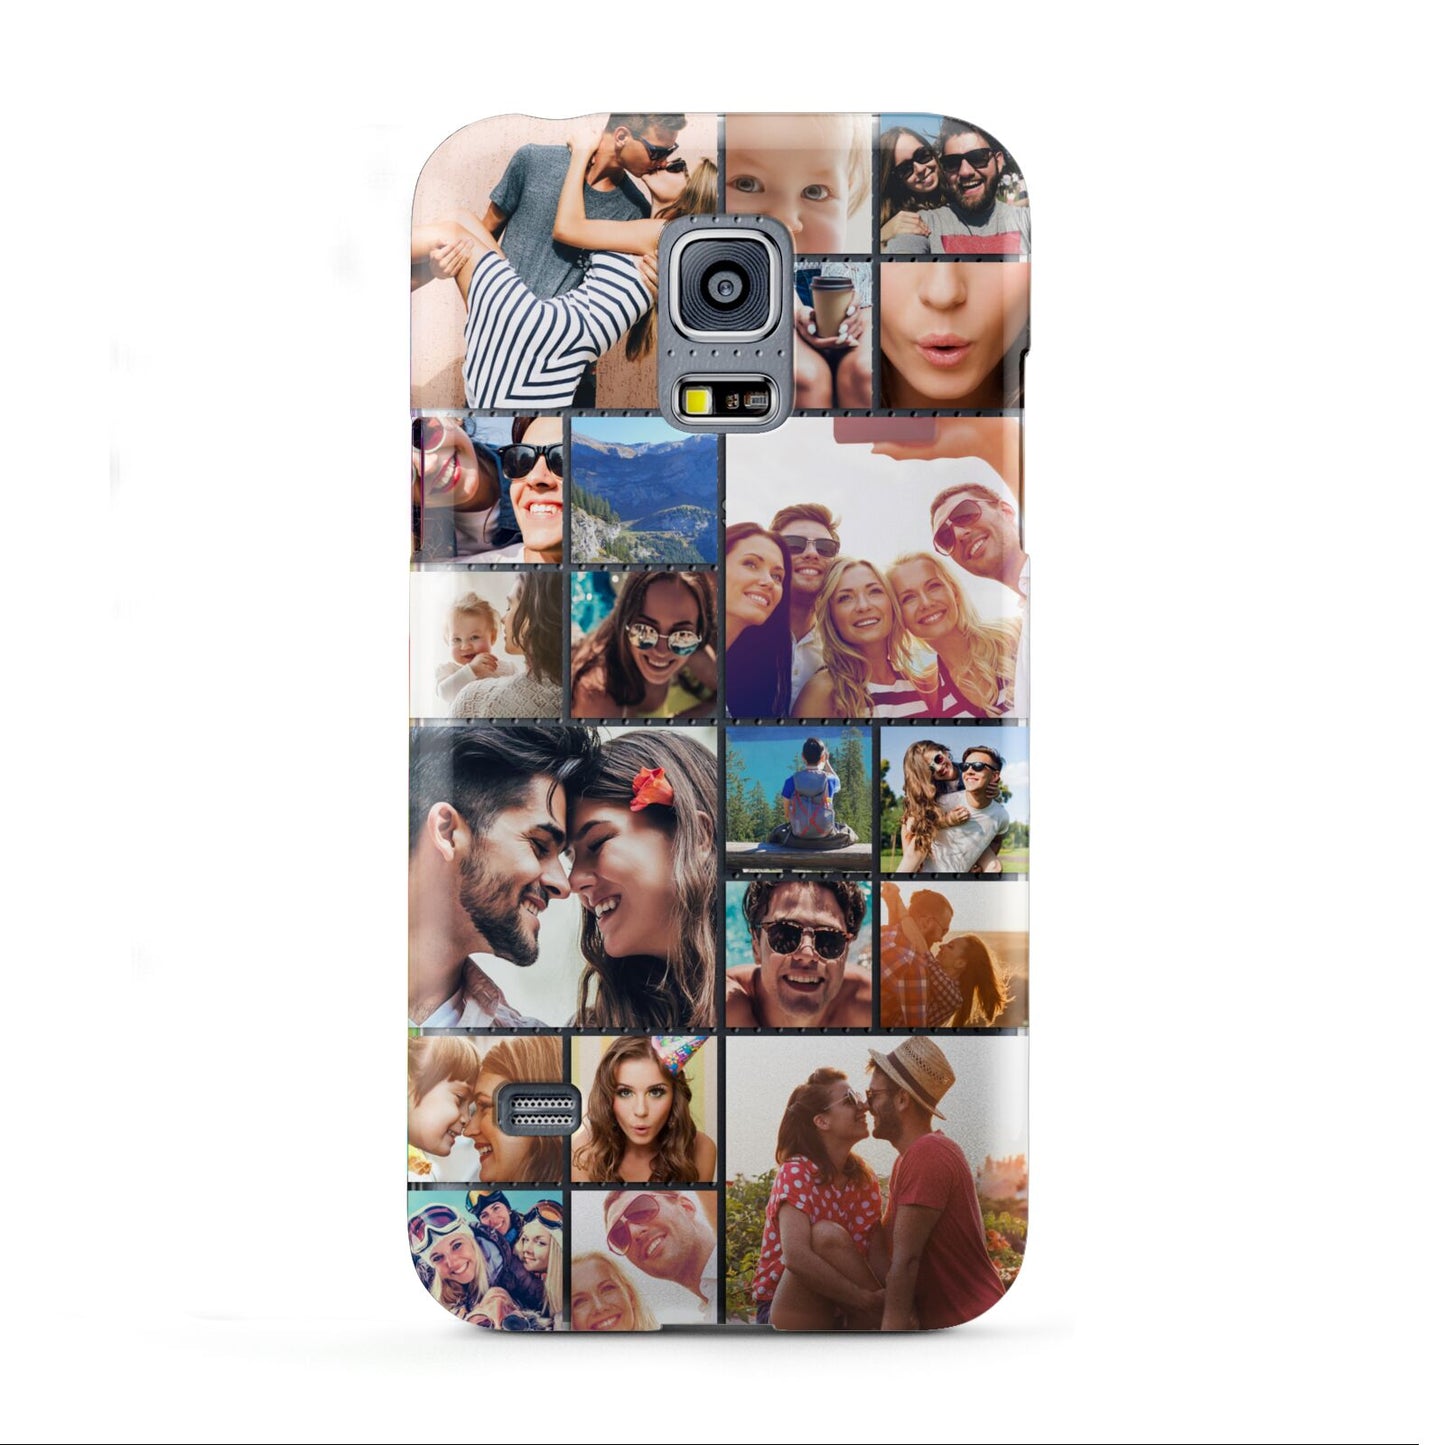 Photo Grid Samsung Galaxy S5 Mini Case